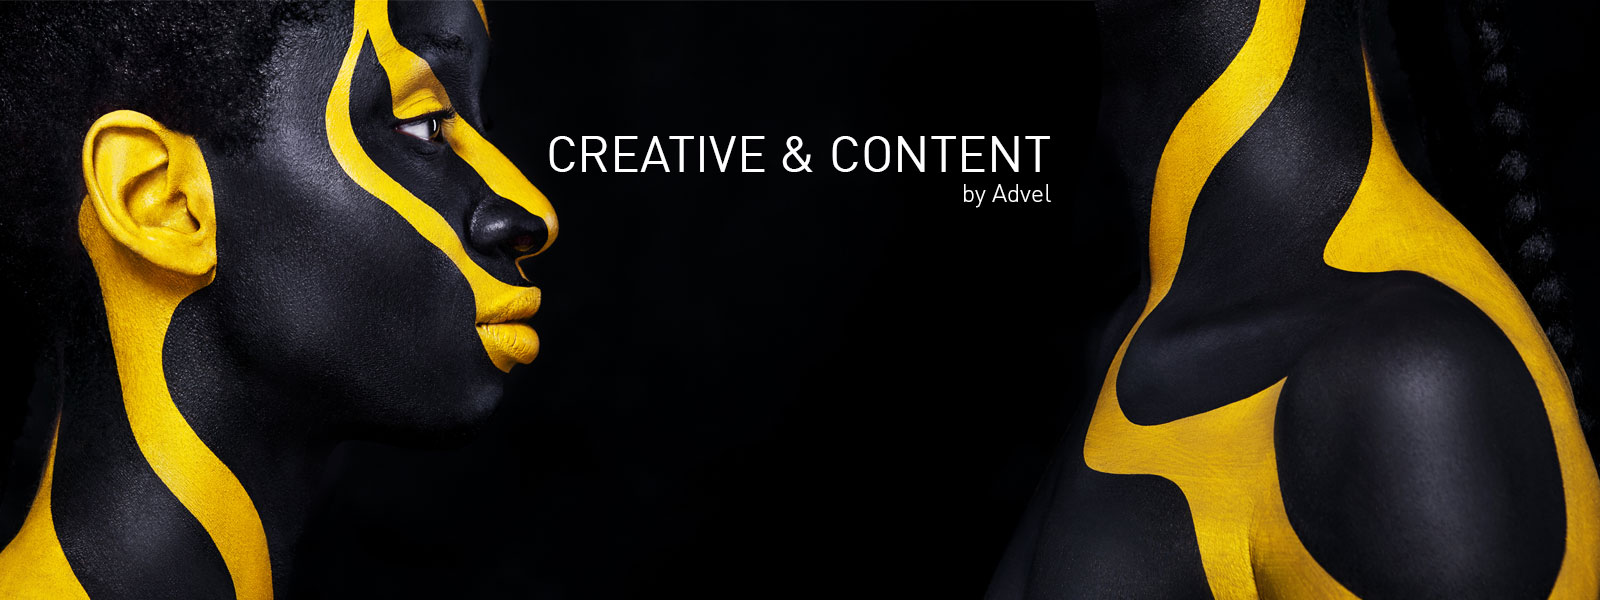 Creative & Content